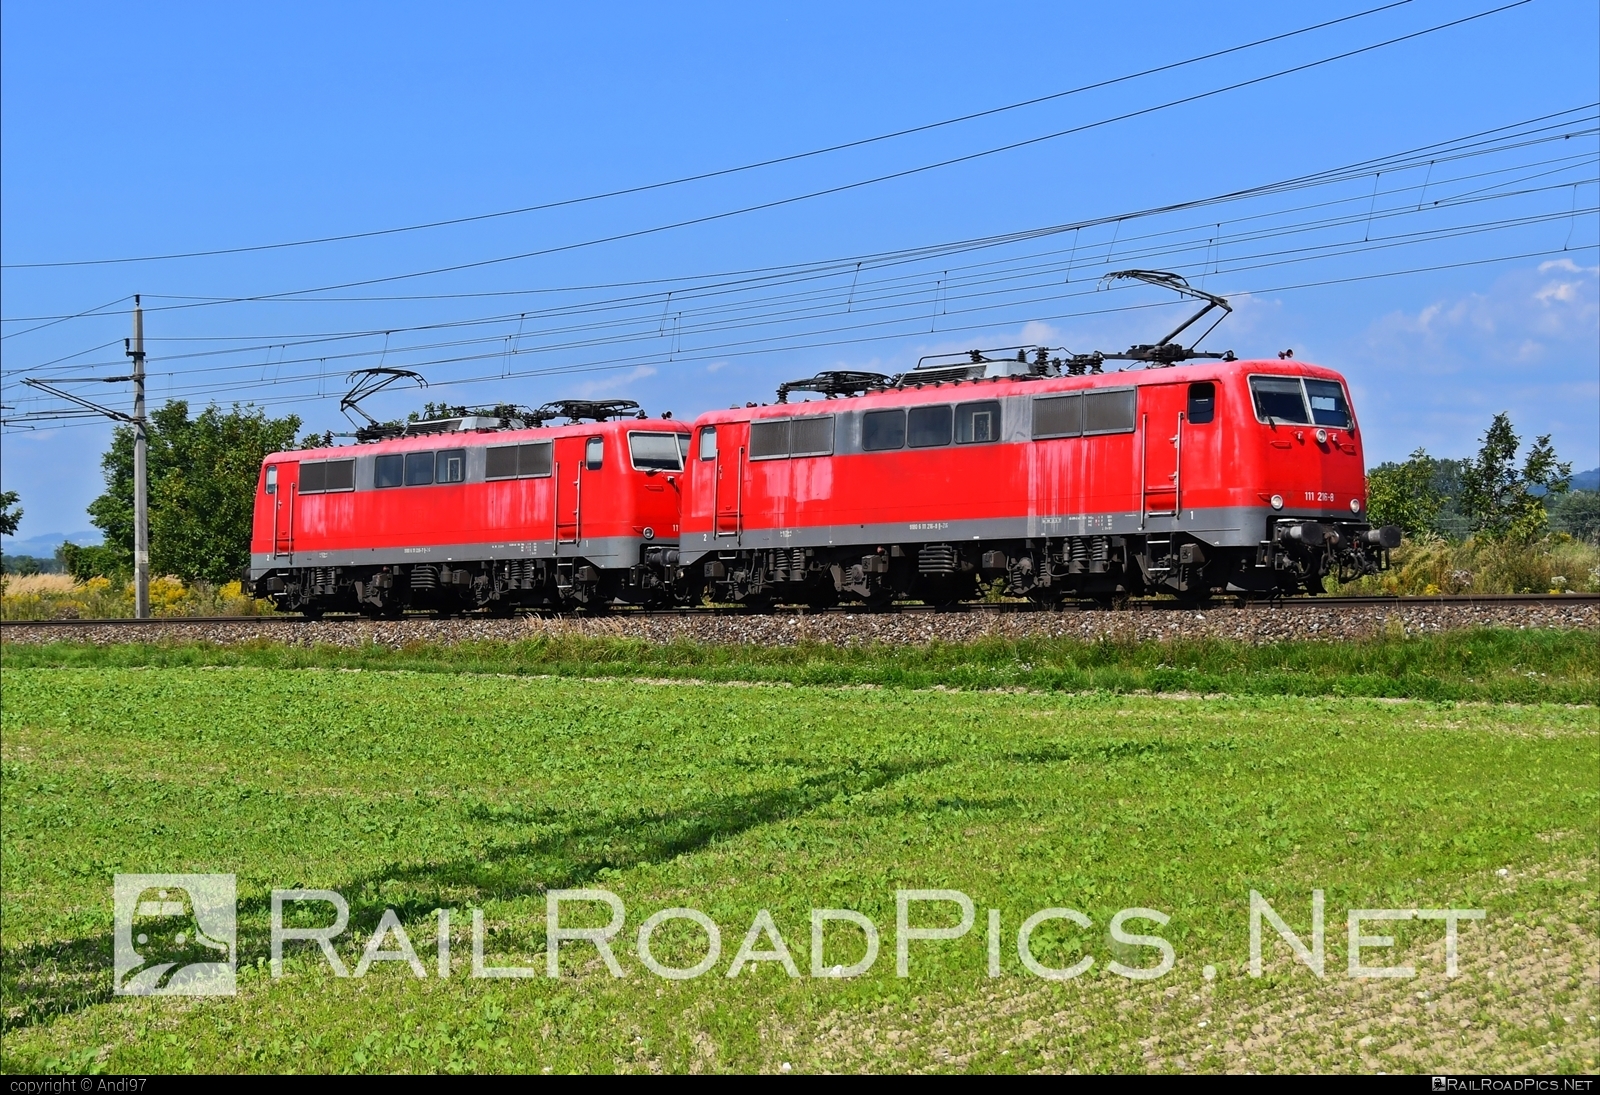 DB Class 111 - 111 216-8 operated by smart rail GmbH #dbClass111 #smartrail #zug